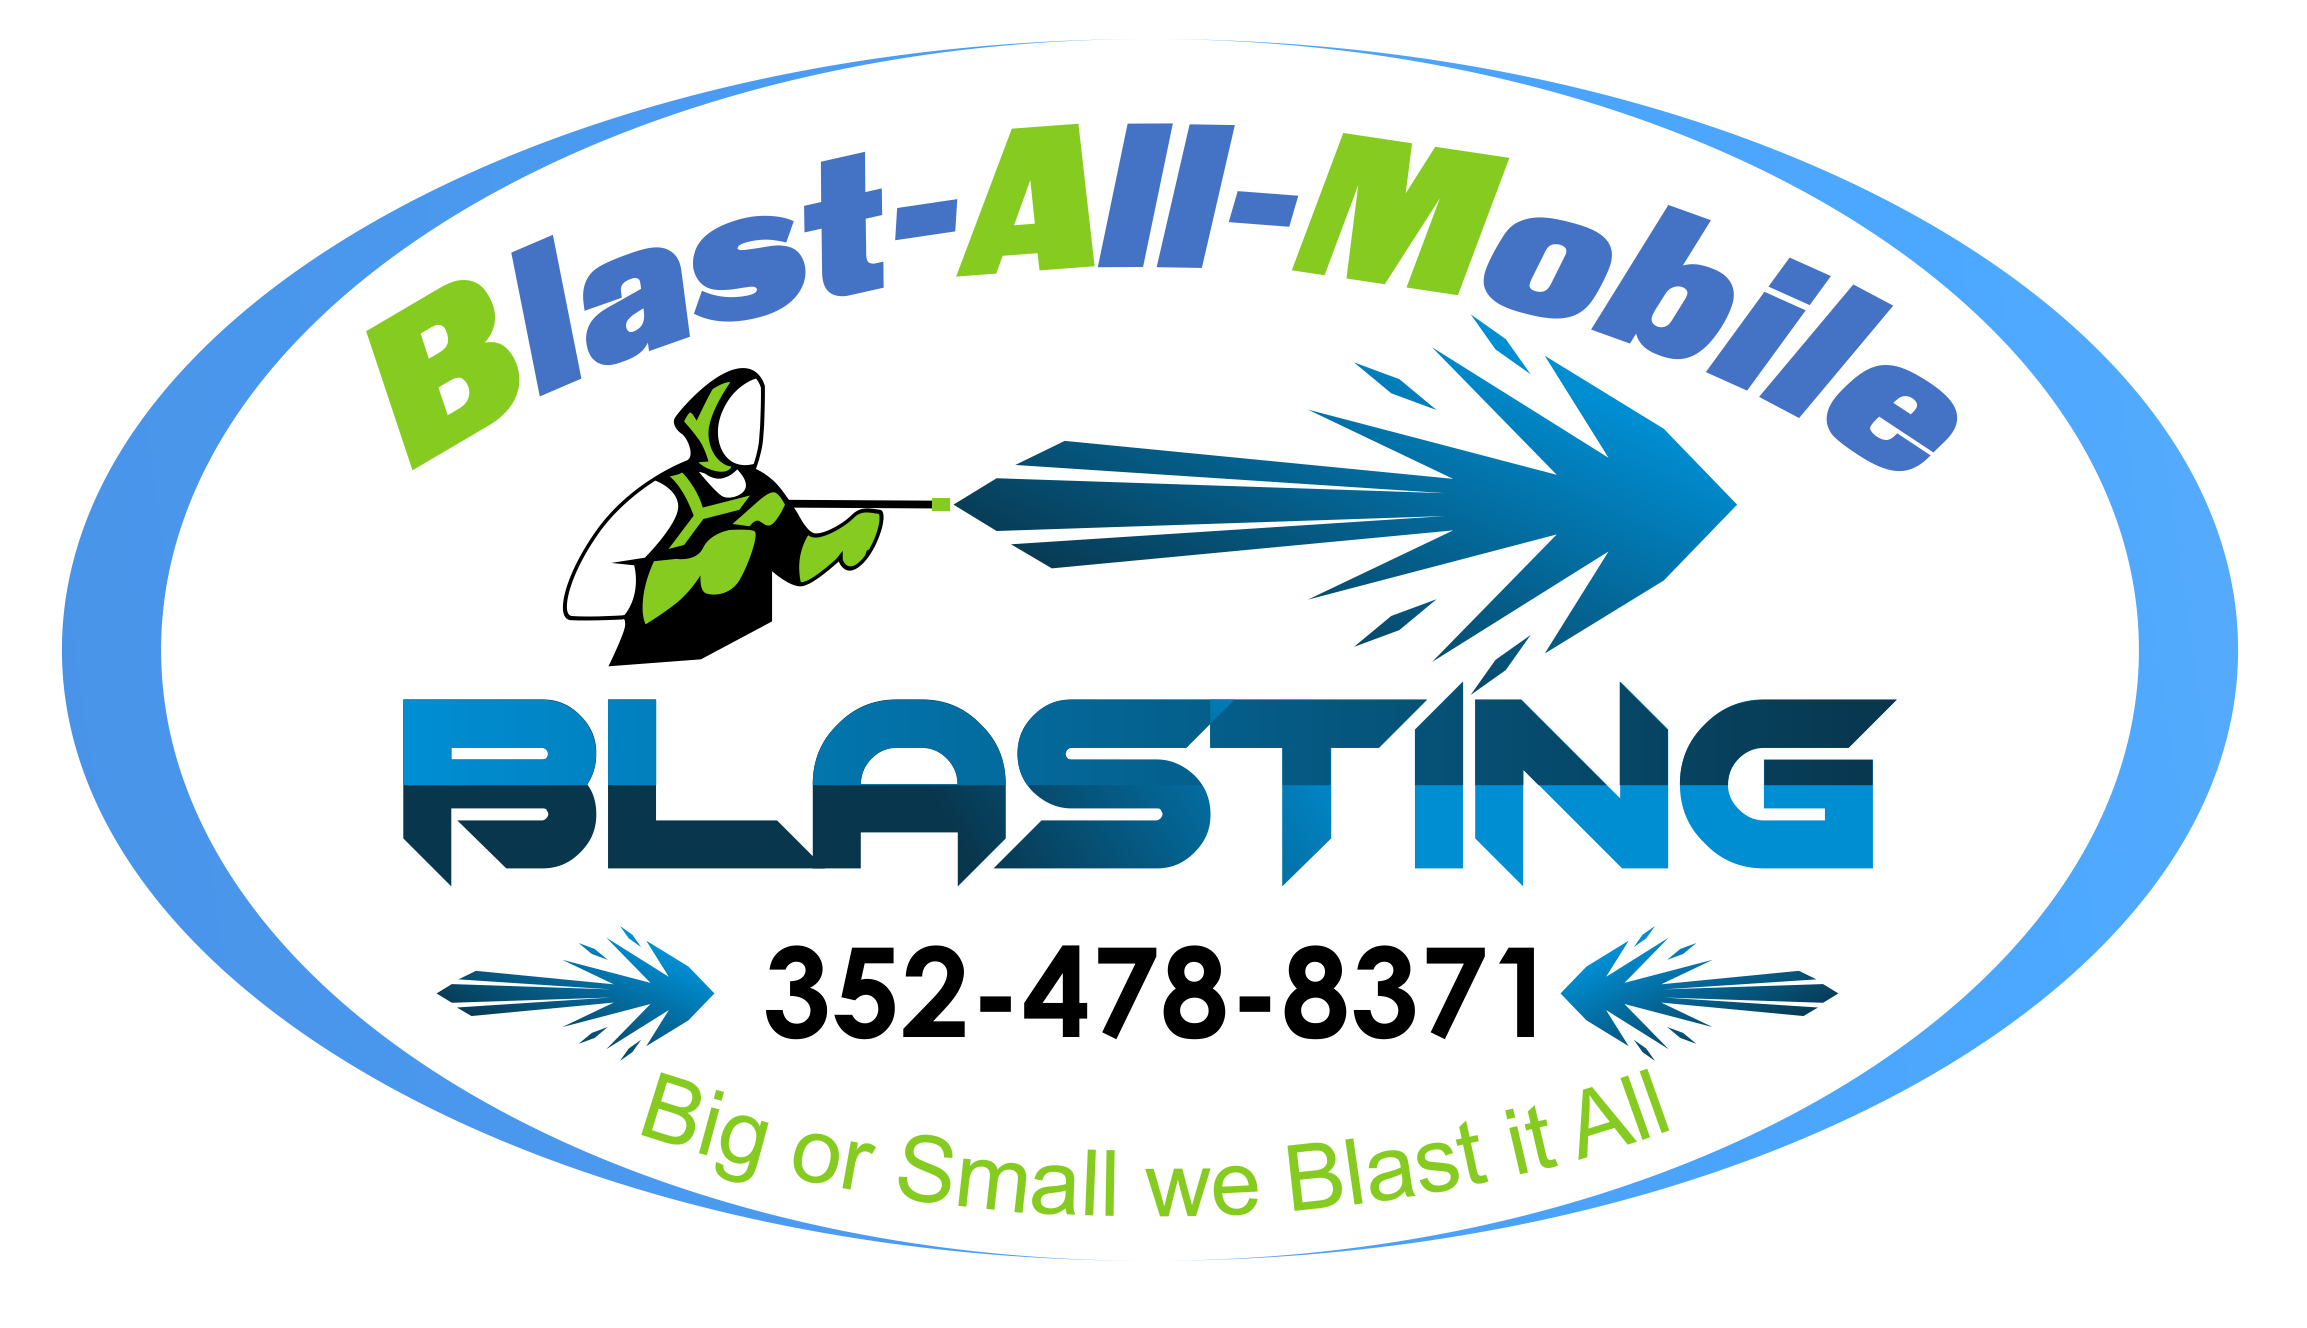 Blast-All-Mobile